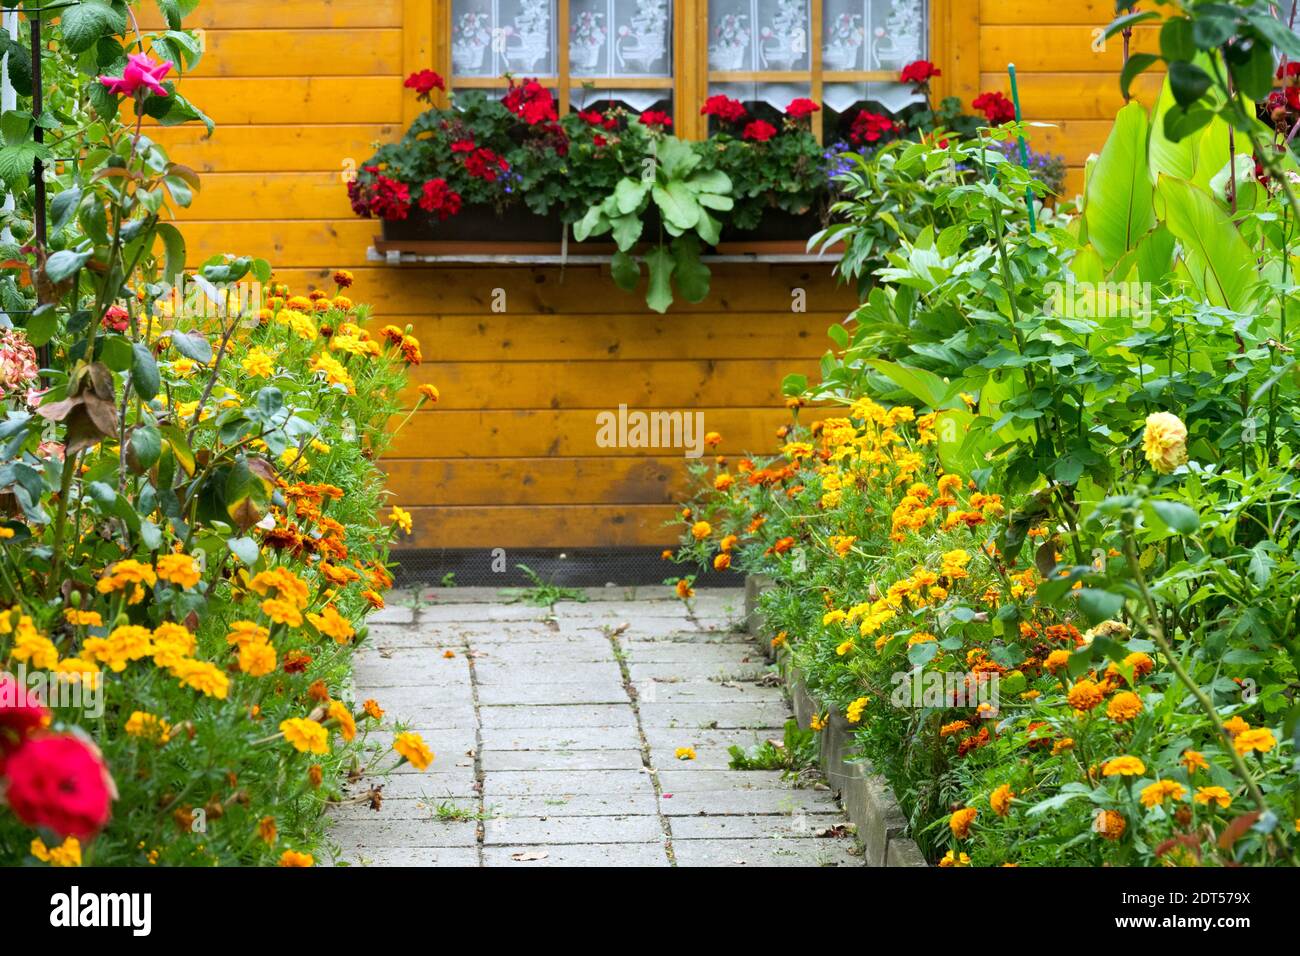 Casetta giardino con persiane in Germania suburbano allotment giardino capanna giardino fiori Foto Stock